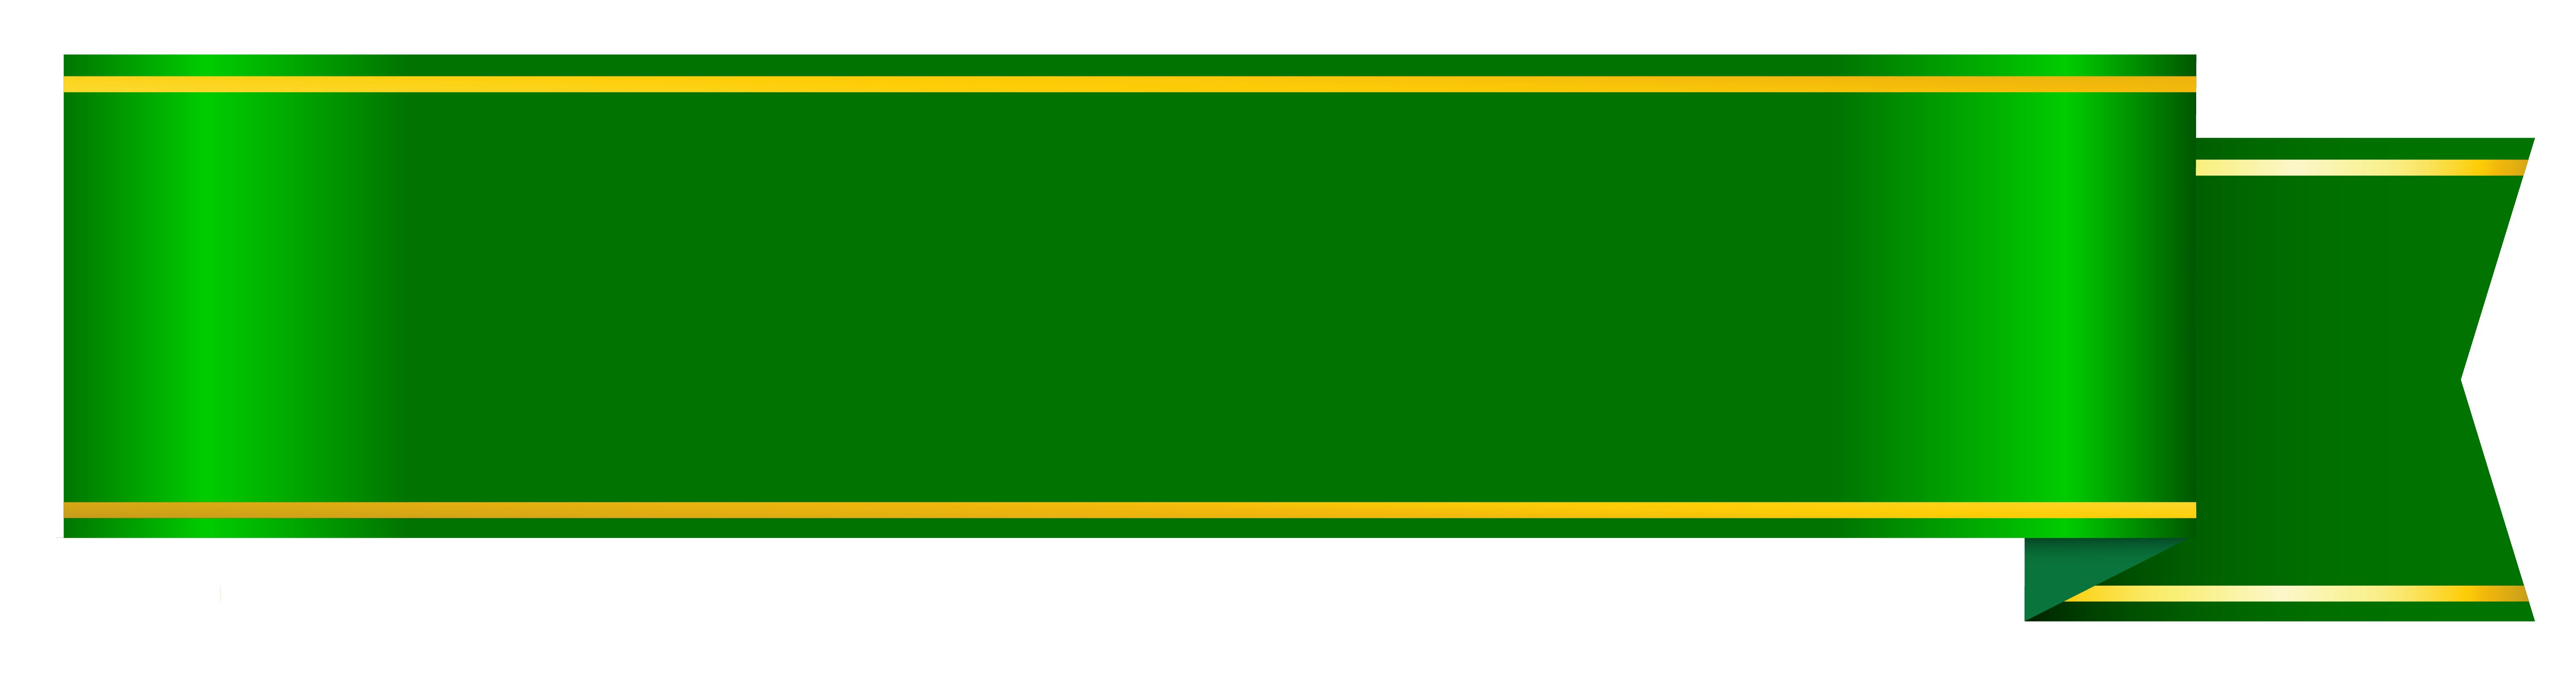 Green ribbon banner.